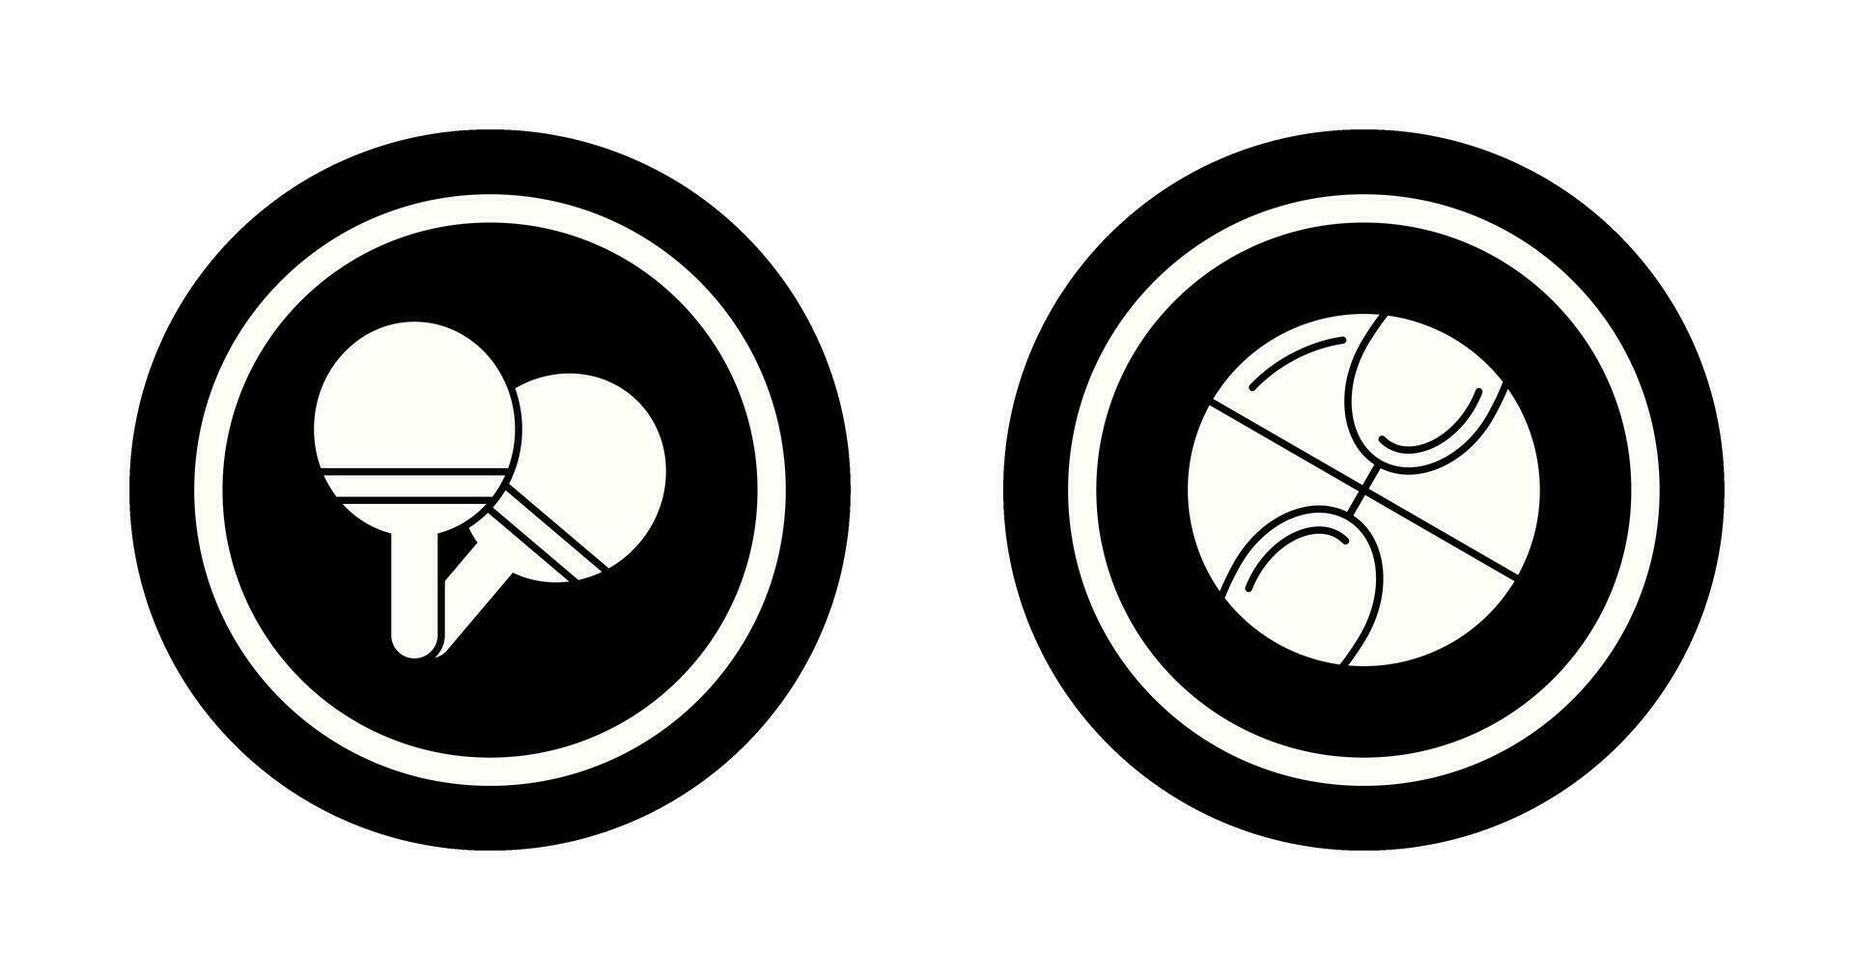 Klingeln Pong und Basketball Symbol vektor